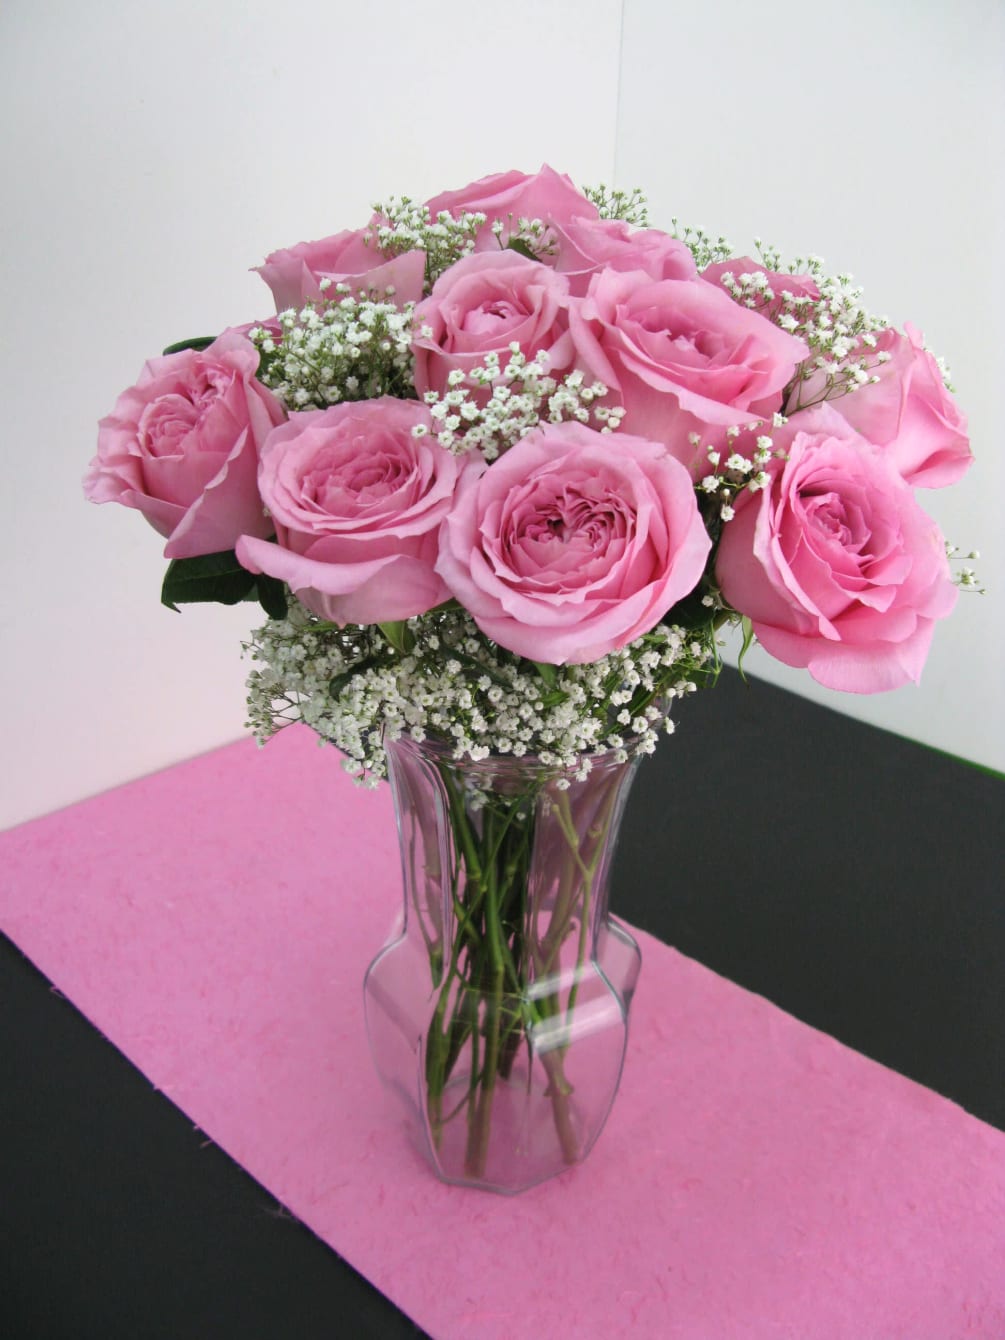 Here we have a simple yet exquisite arrangement of a dozen pink